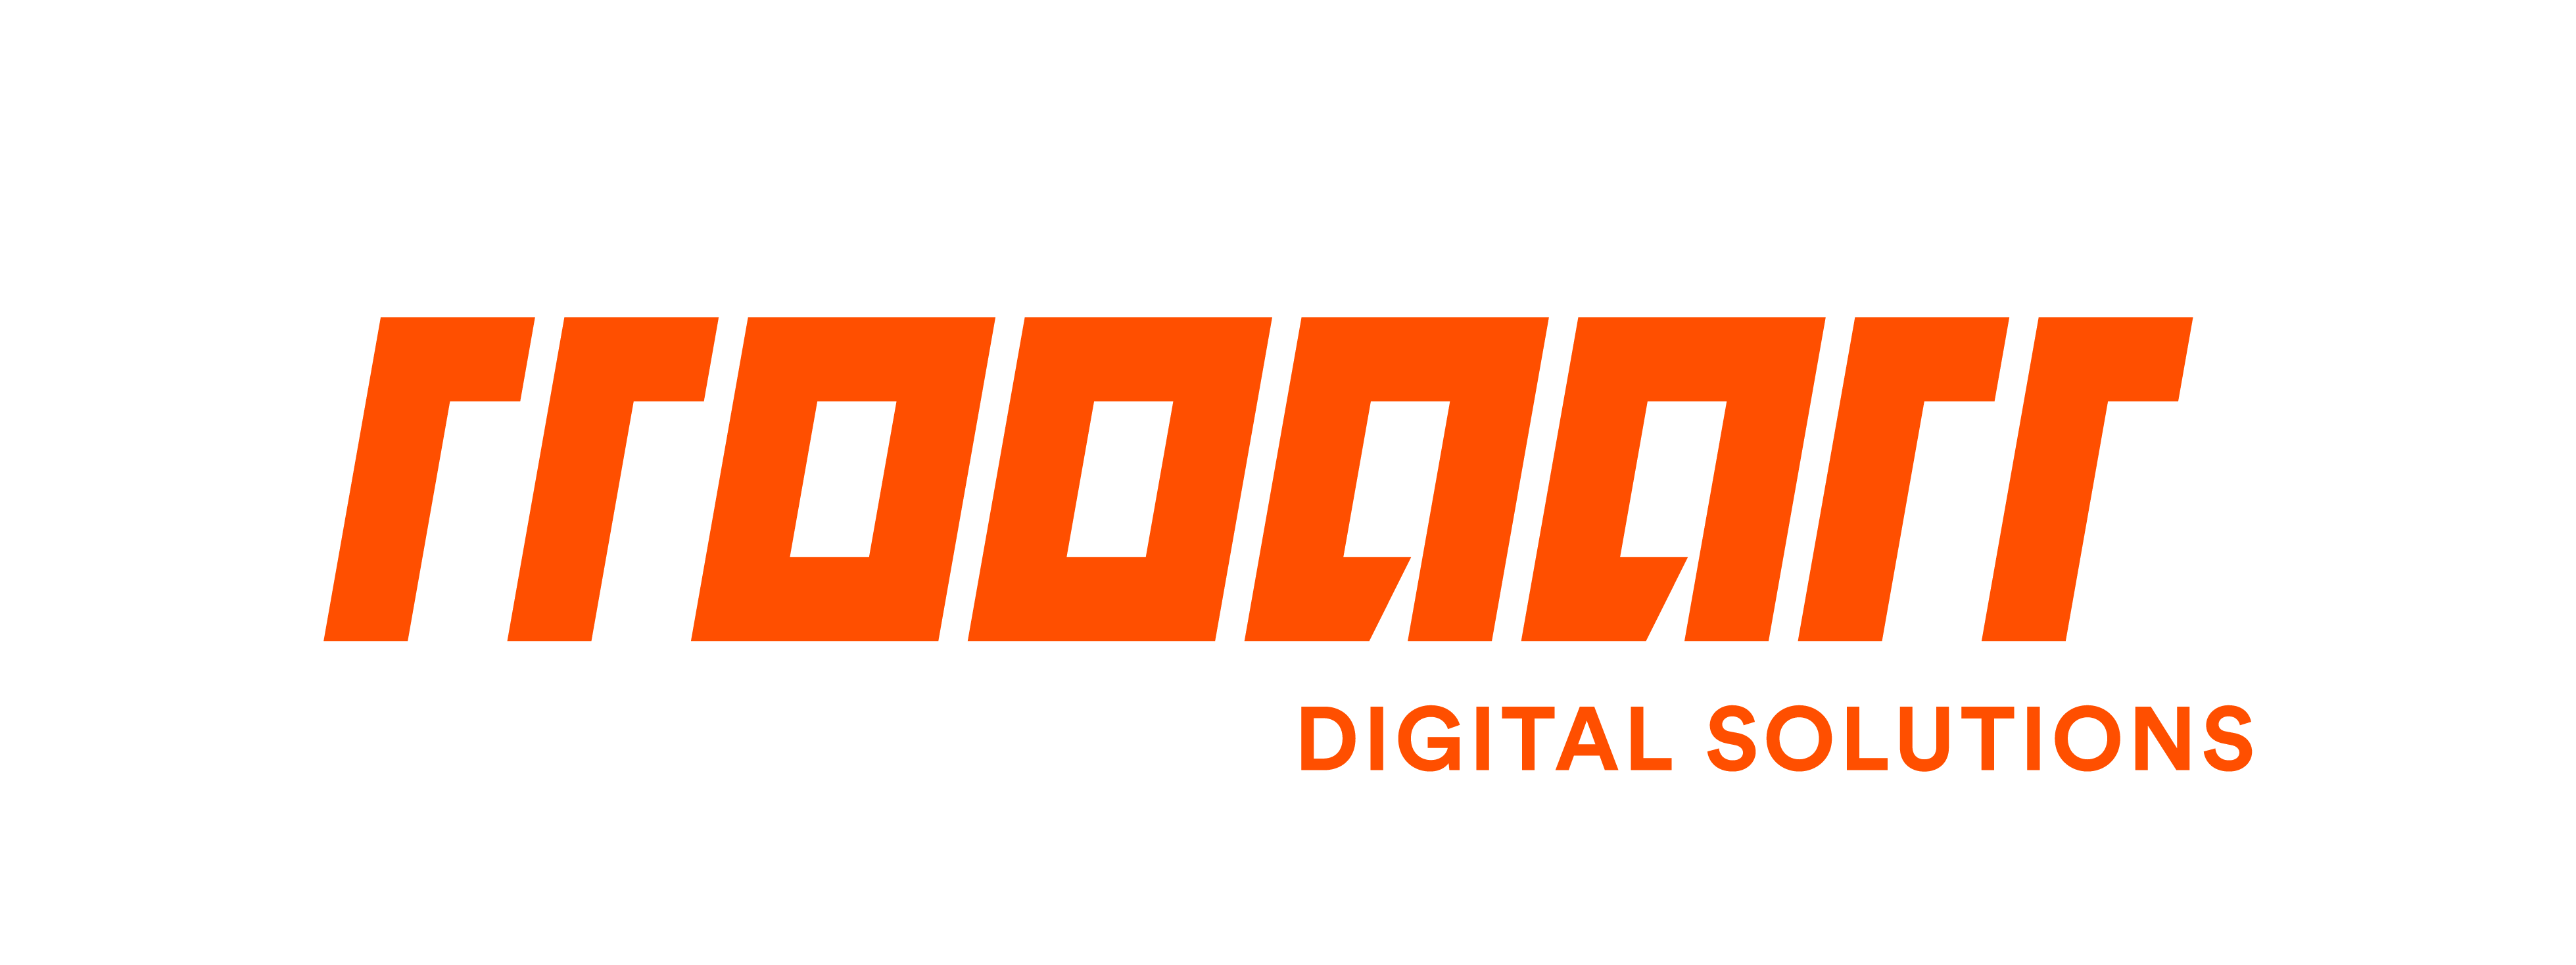 Orangenes rrooaarr Logo